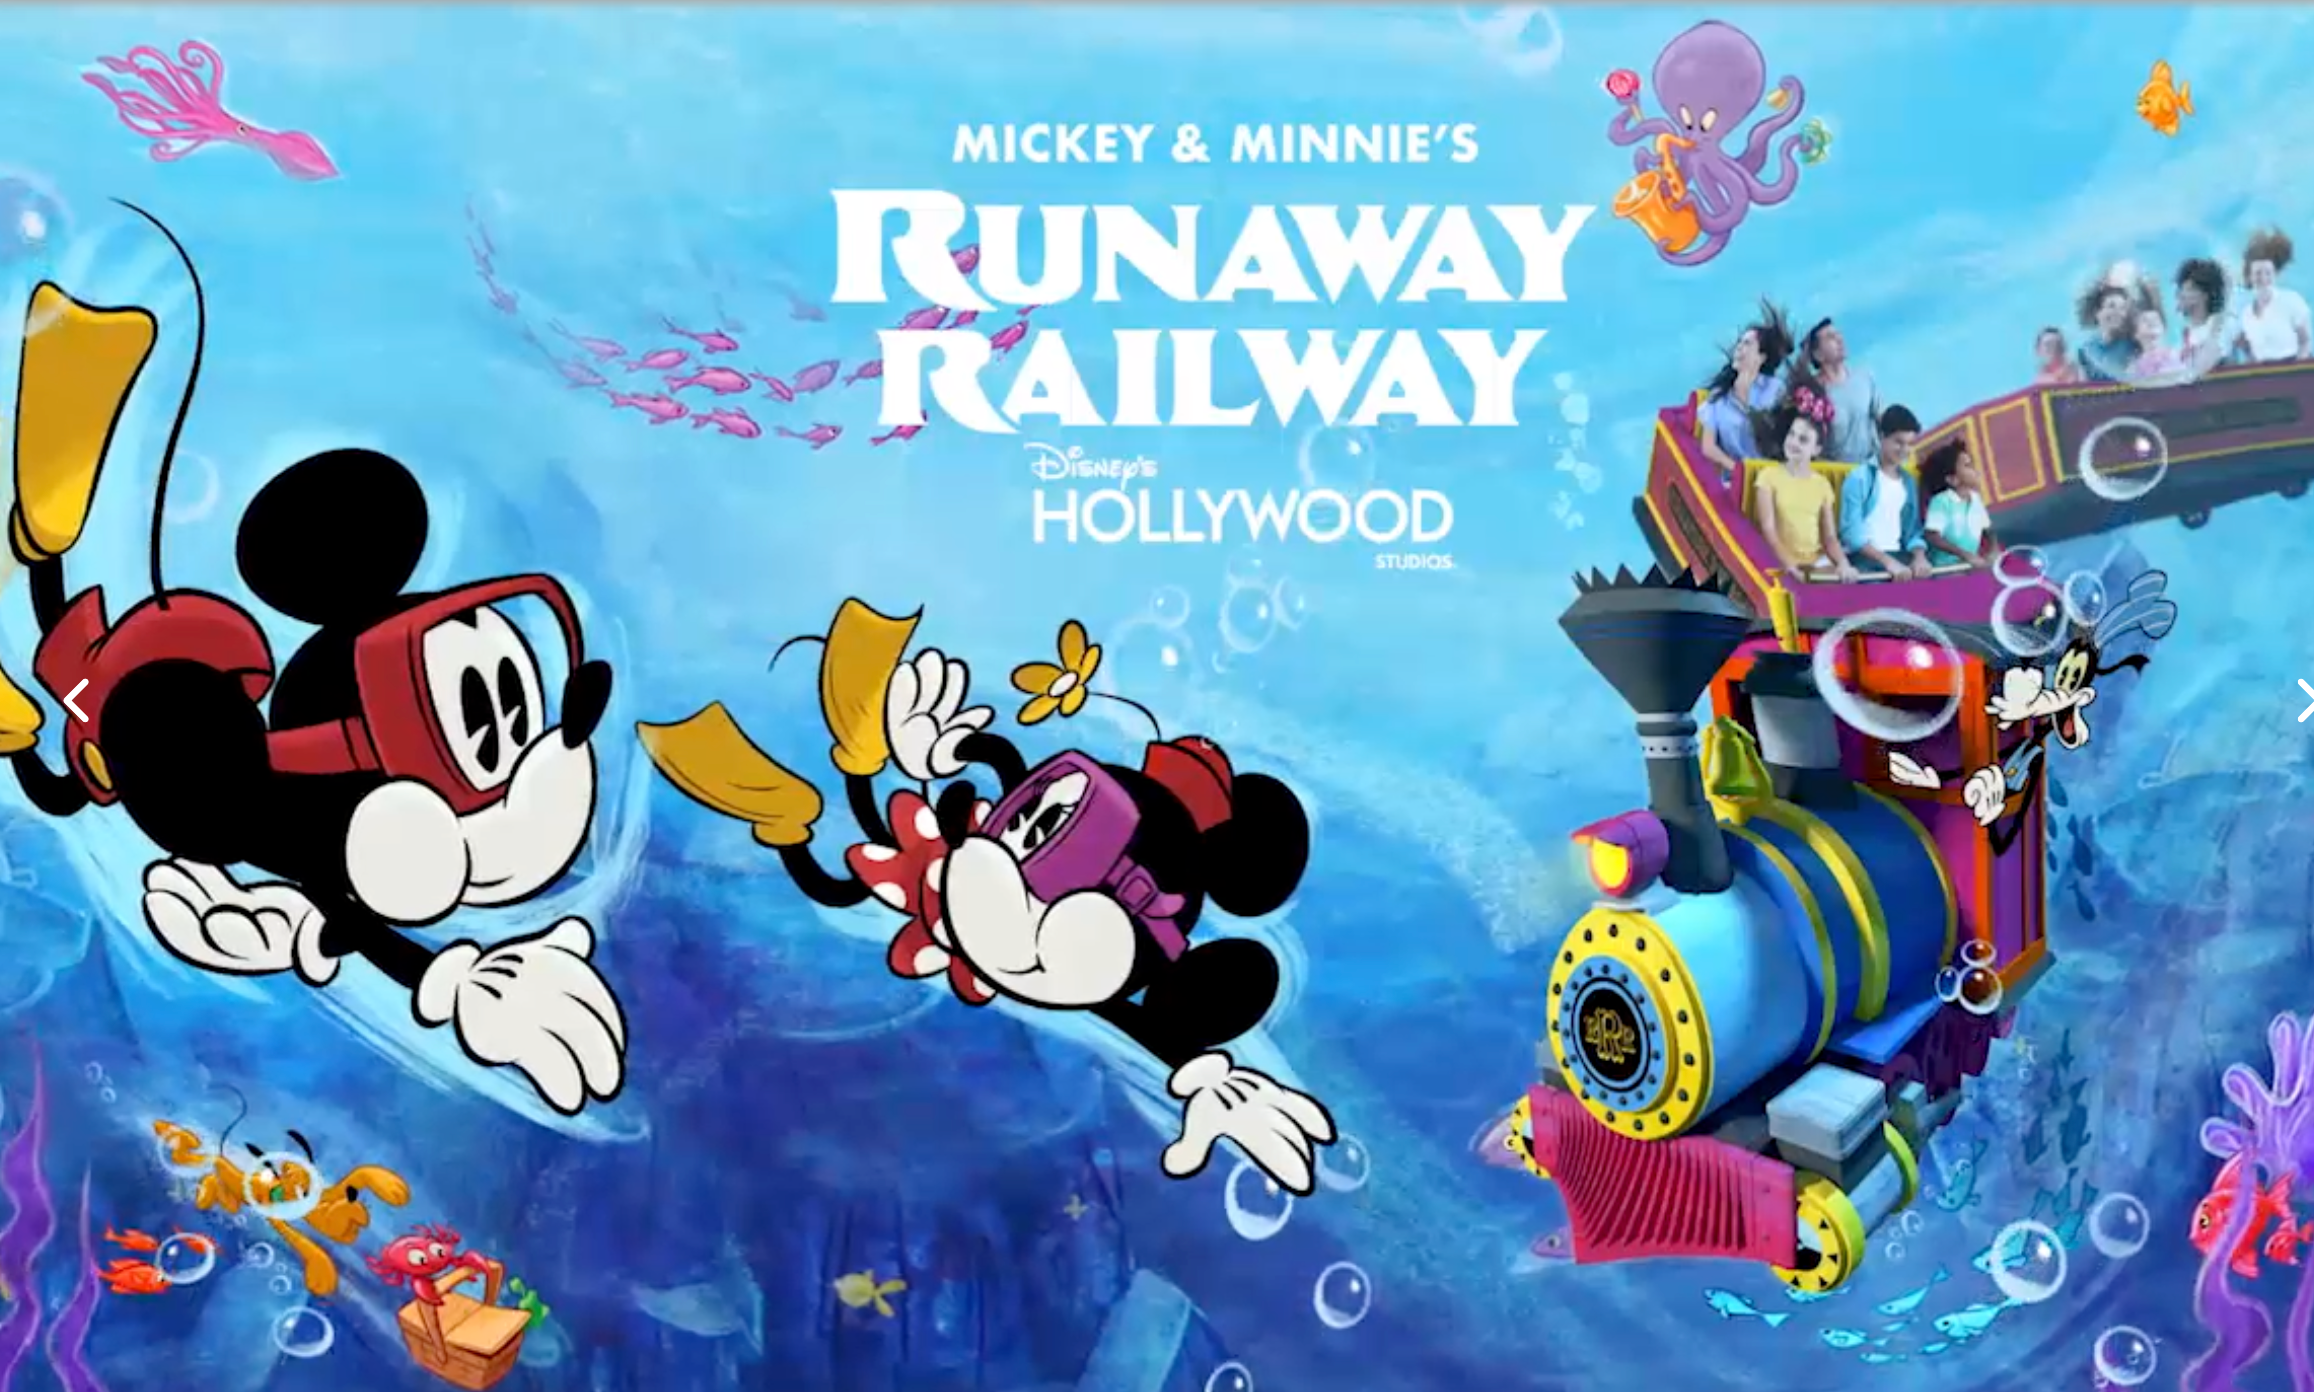 Mickey__Minnie%E2%80%99s_Runaway_Railway_-_Coming_March_4_2020_to_Hollywood_Studios_Walt_Disney_World_Resort_-_2020-02-06_12.33.45.png